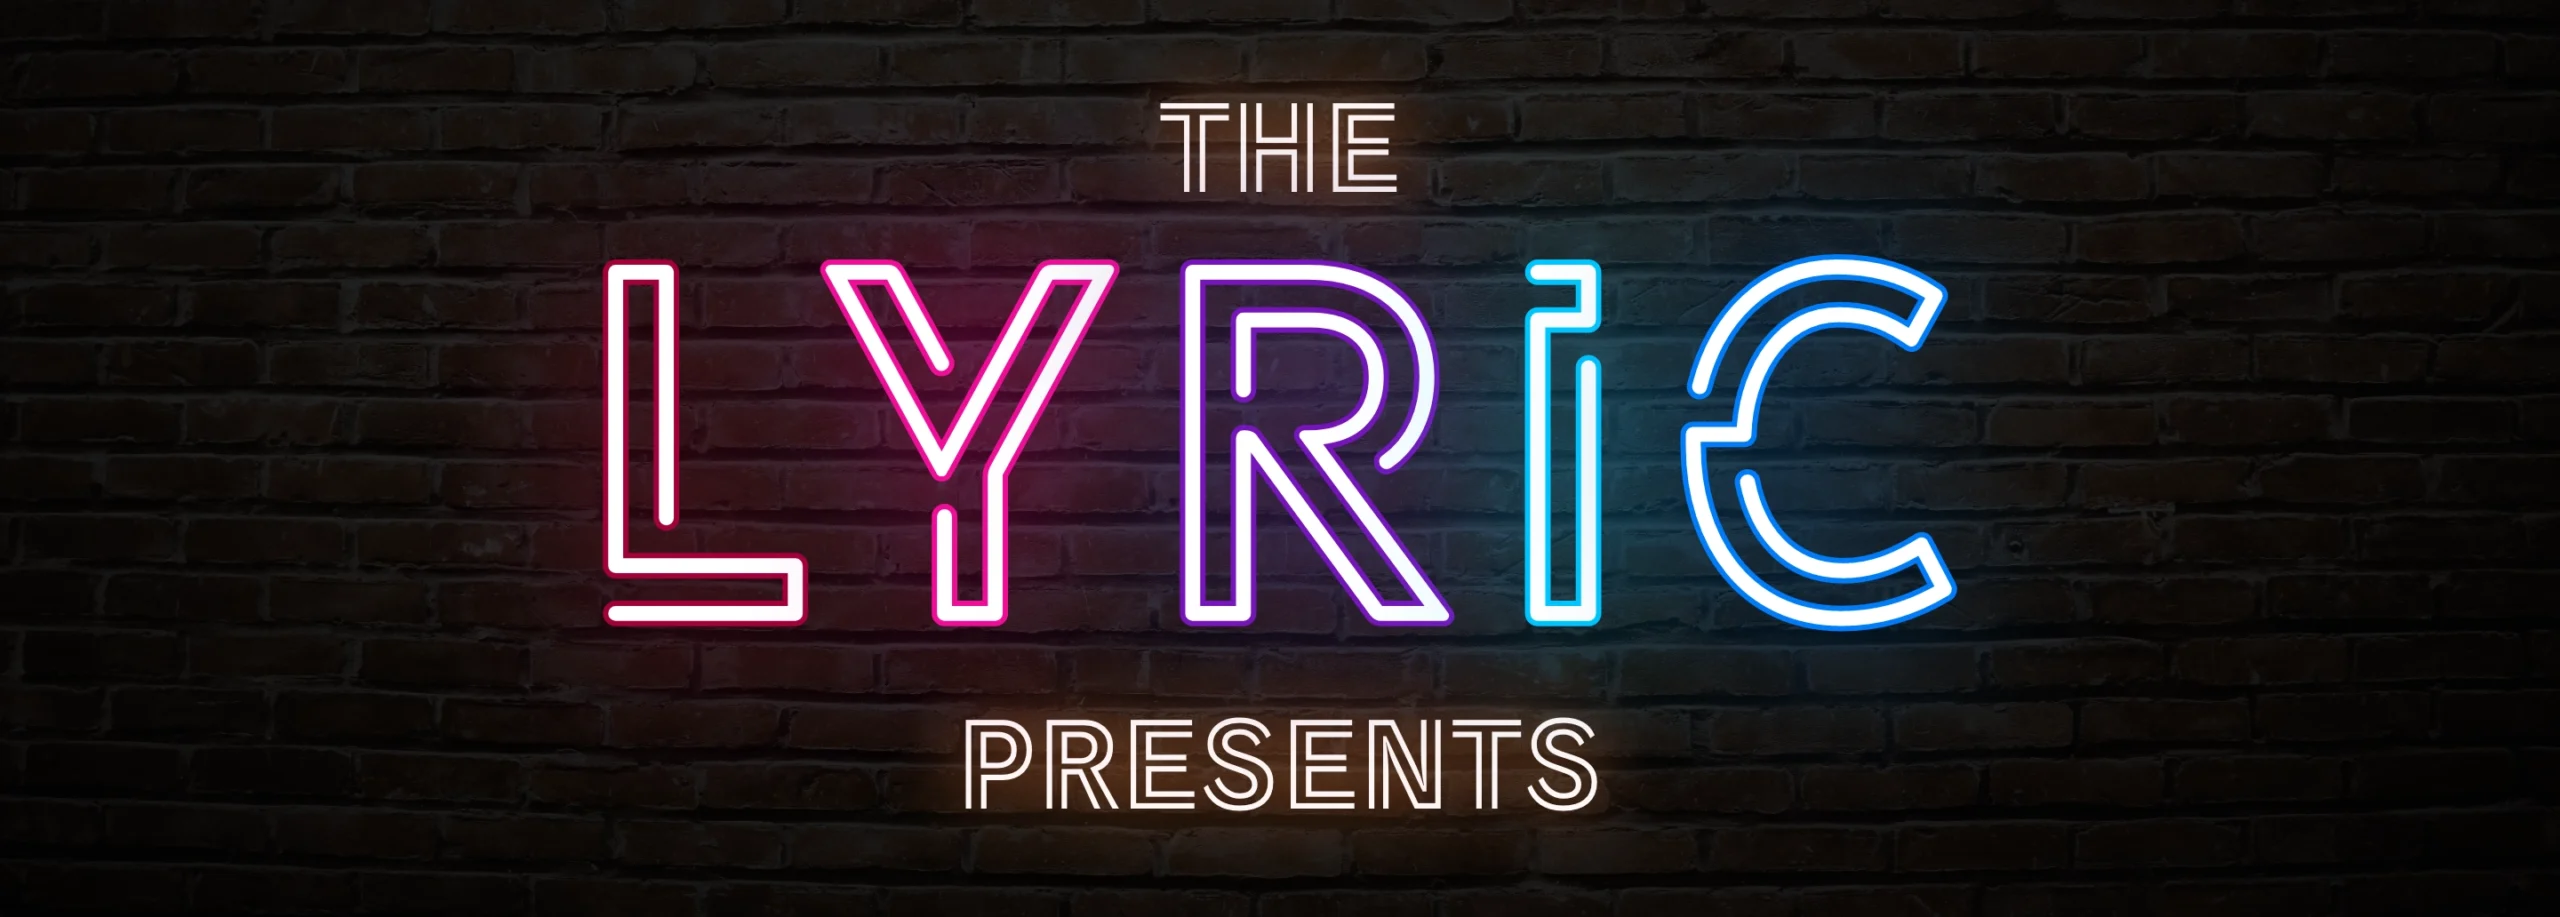 The Lyric Theatre homepage hero